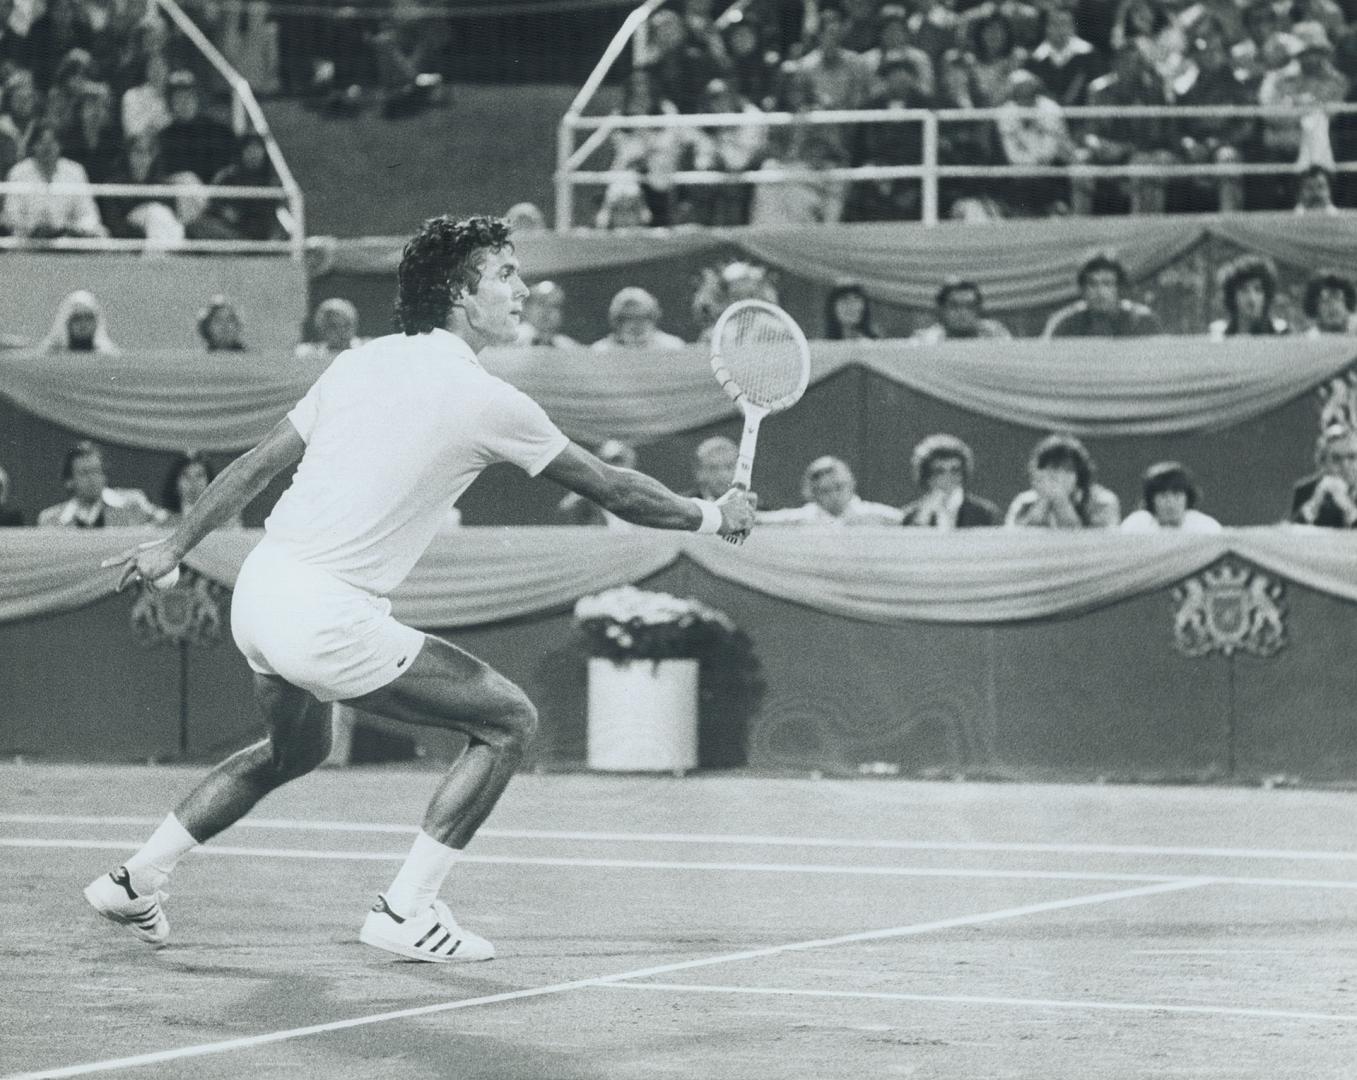 Jeff Borowiak 1977 Canadian Open tennis Champion